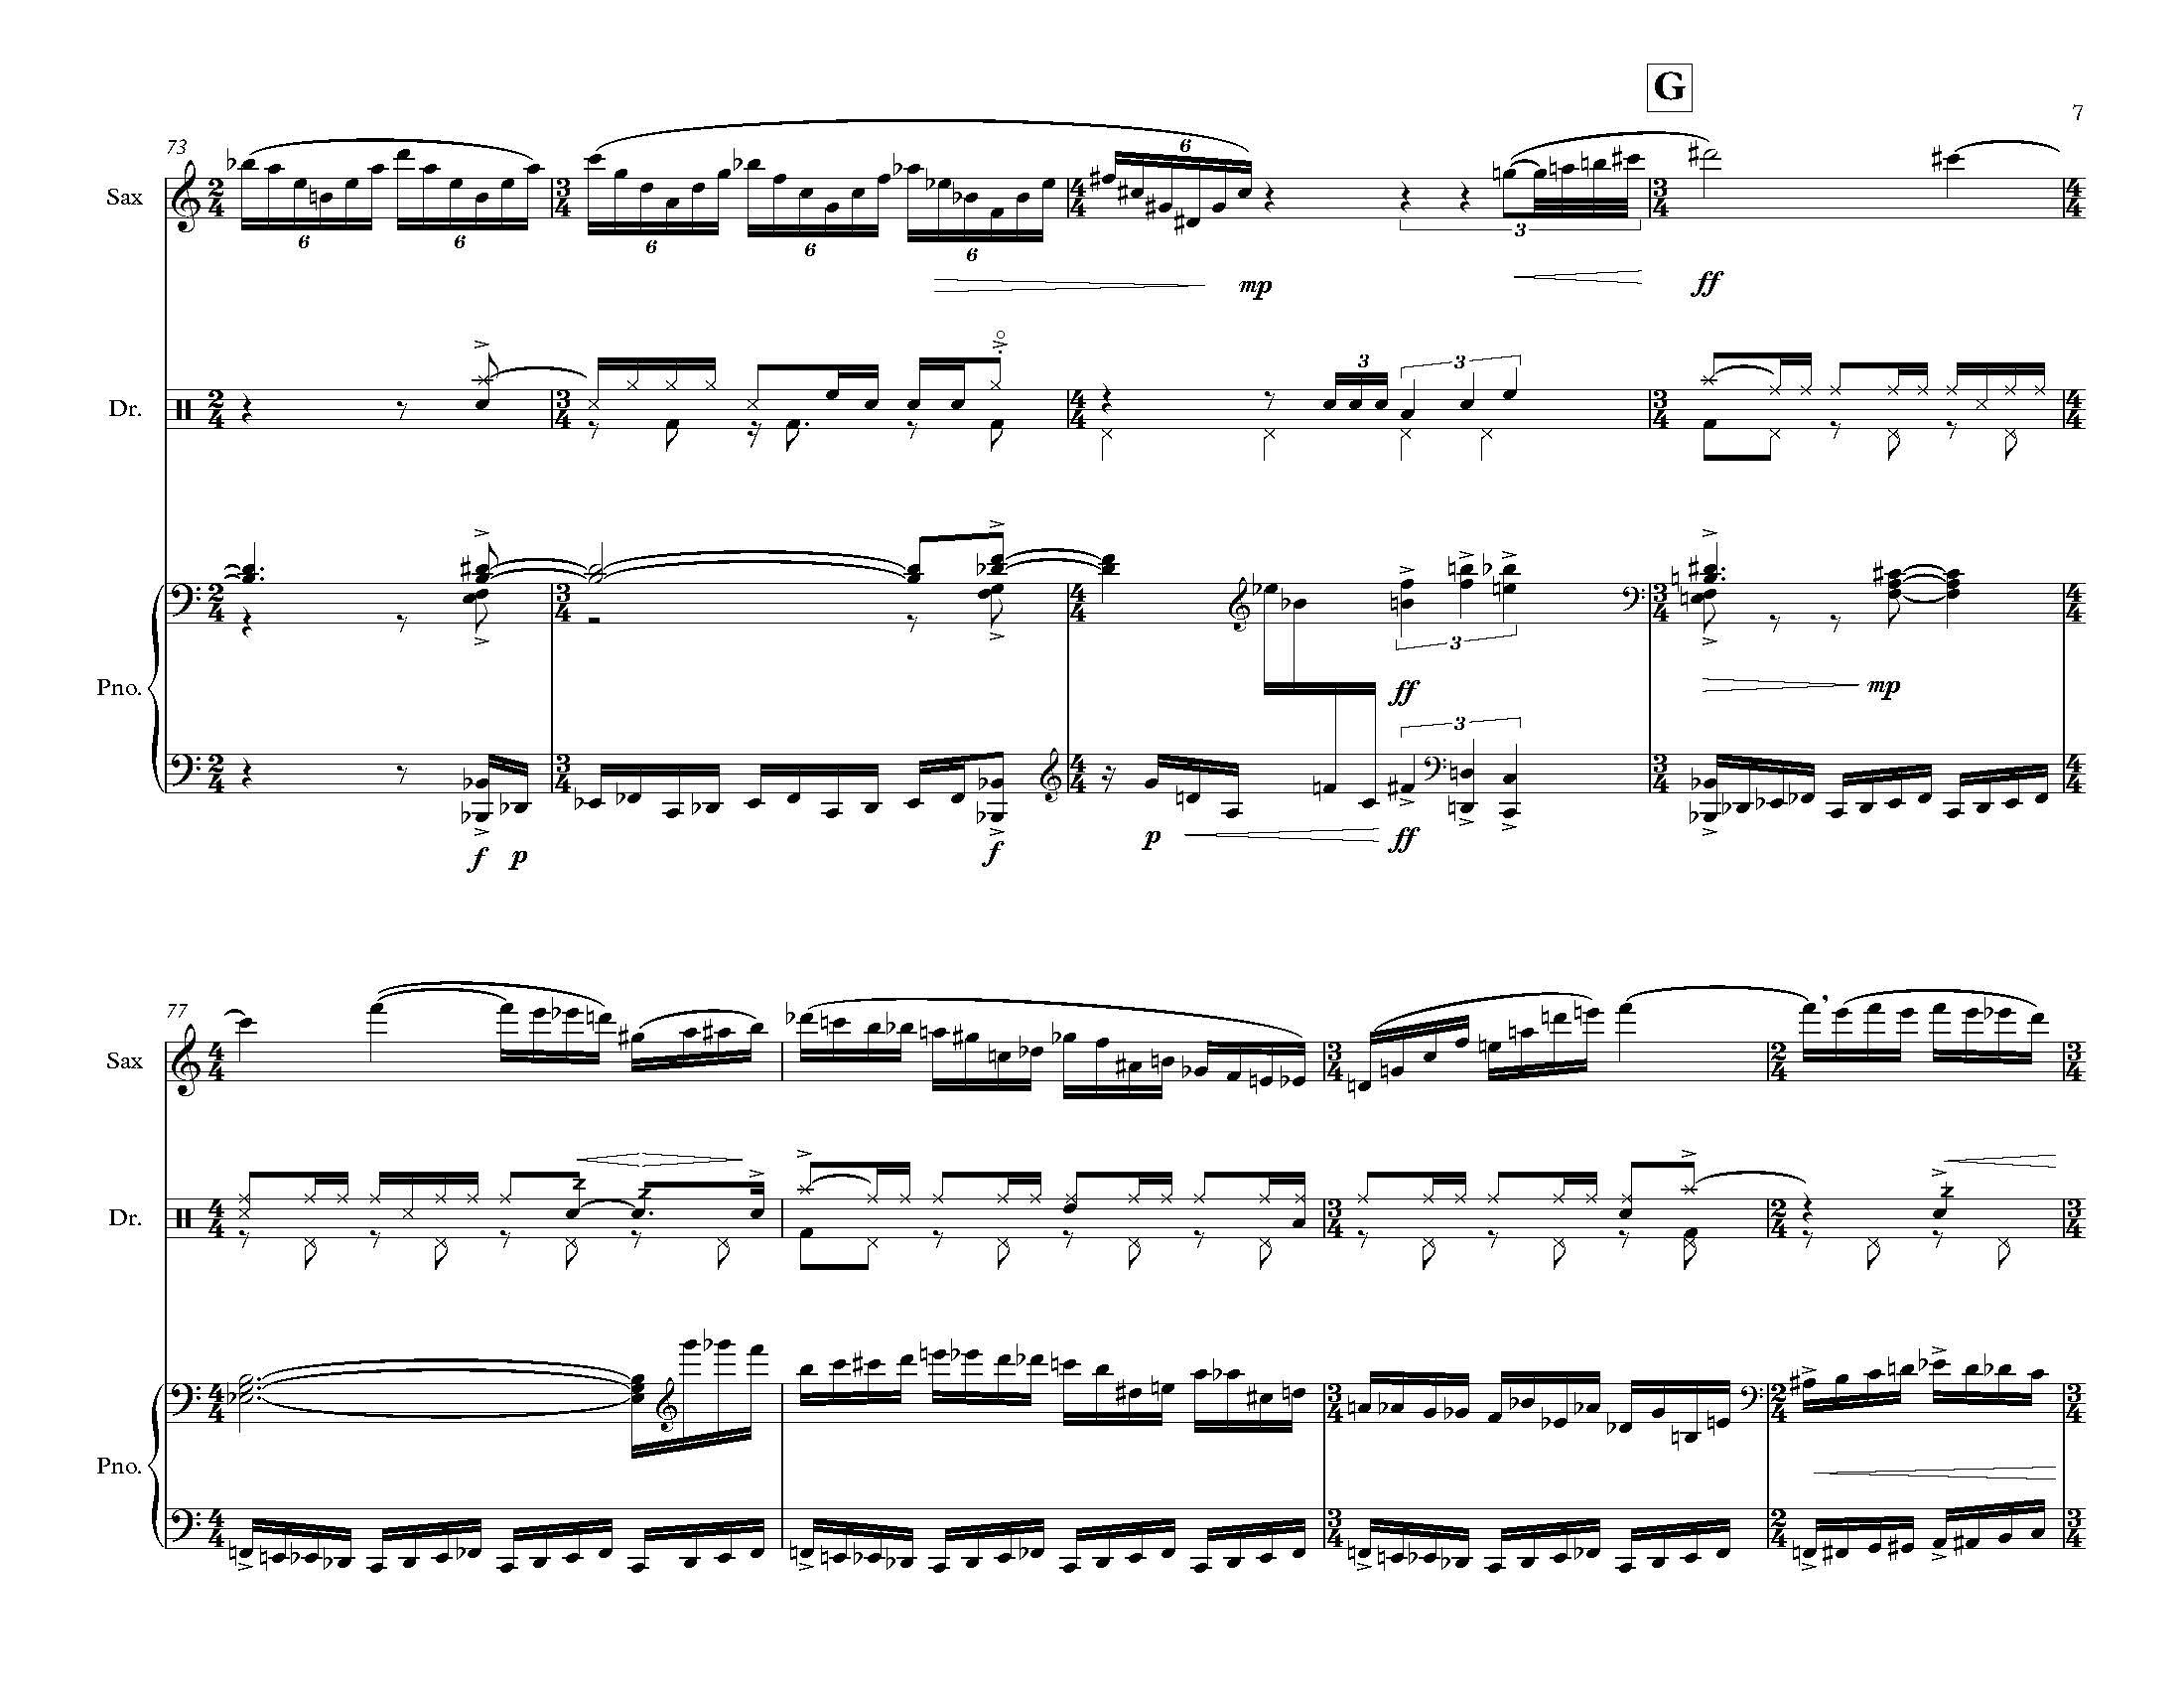 pOwer trIo - Complete Score_Page_13.jpg